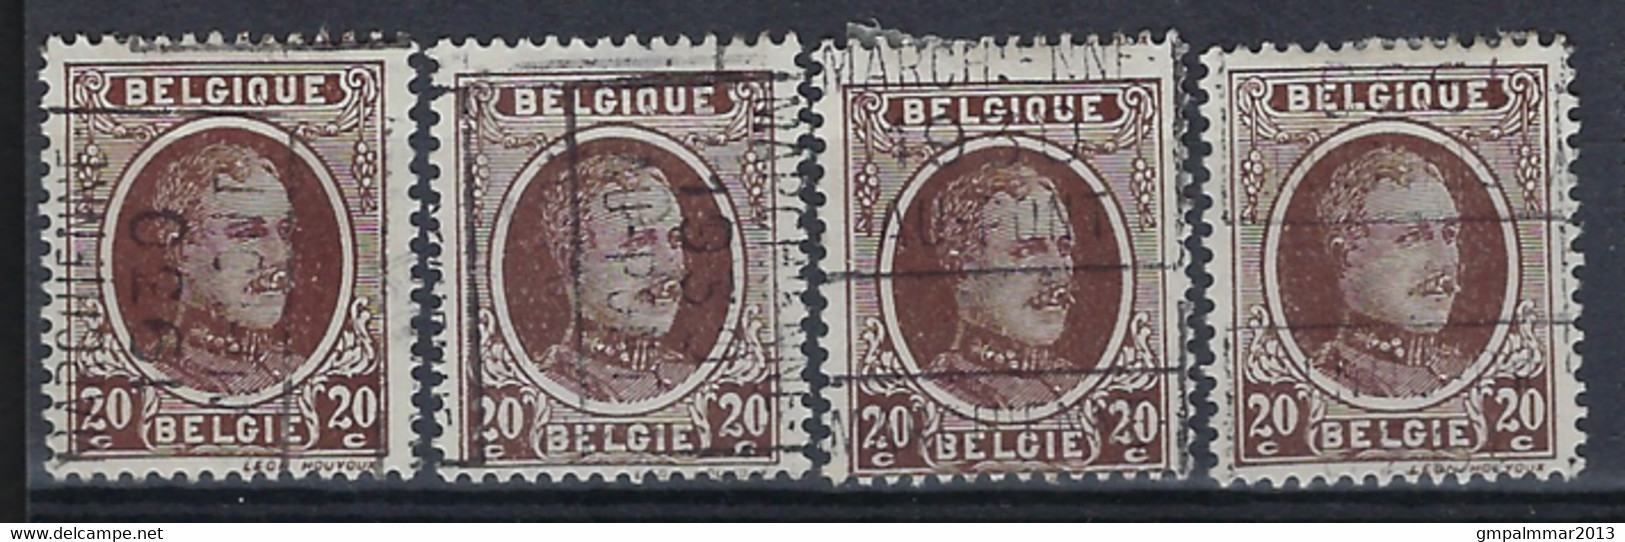 Houyoux Nr. 196 Voorafgestempeld Nr. 5509 A + B + C + D   MARCHIENNE - AU - PONT 1930 ; Staat Zie Scan ! - Rollenmarken 1930-..